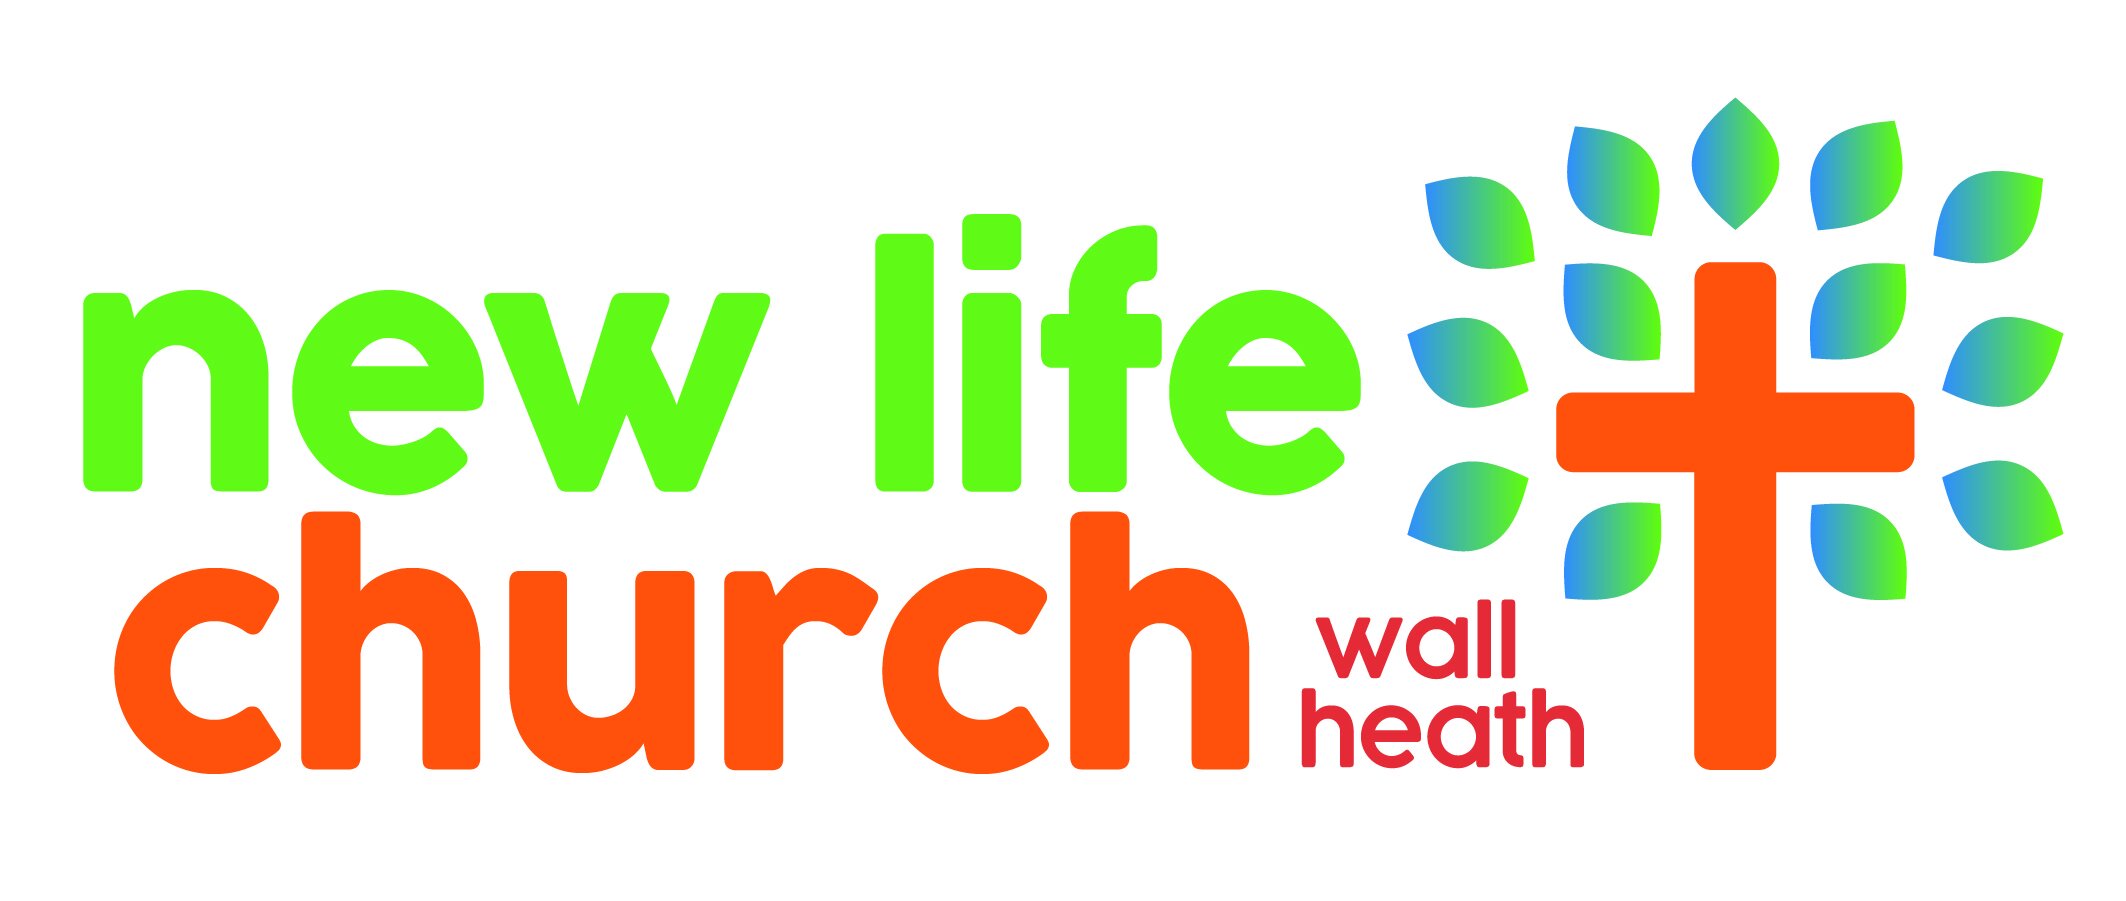 Wall Heath Evangelical Free church